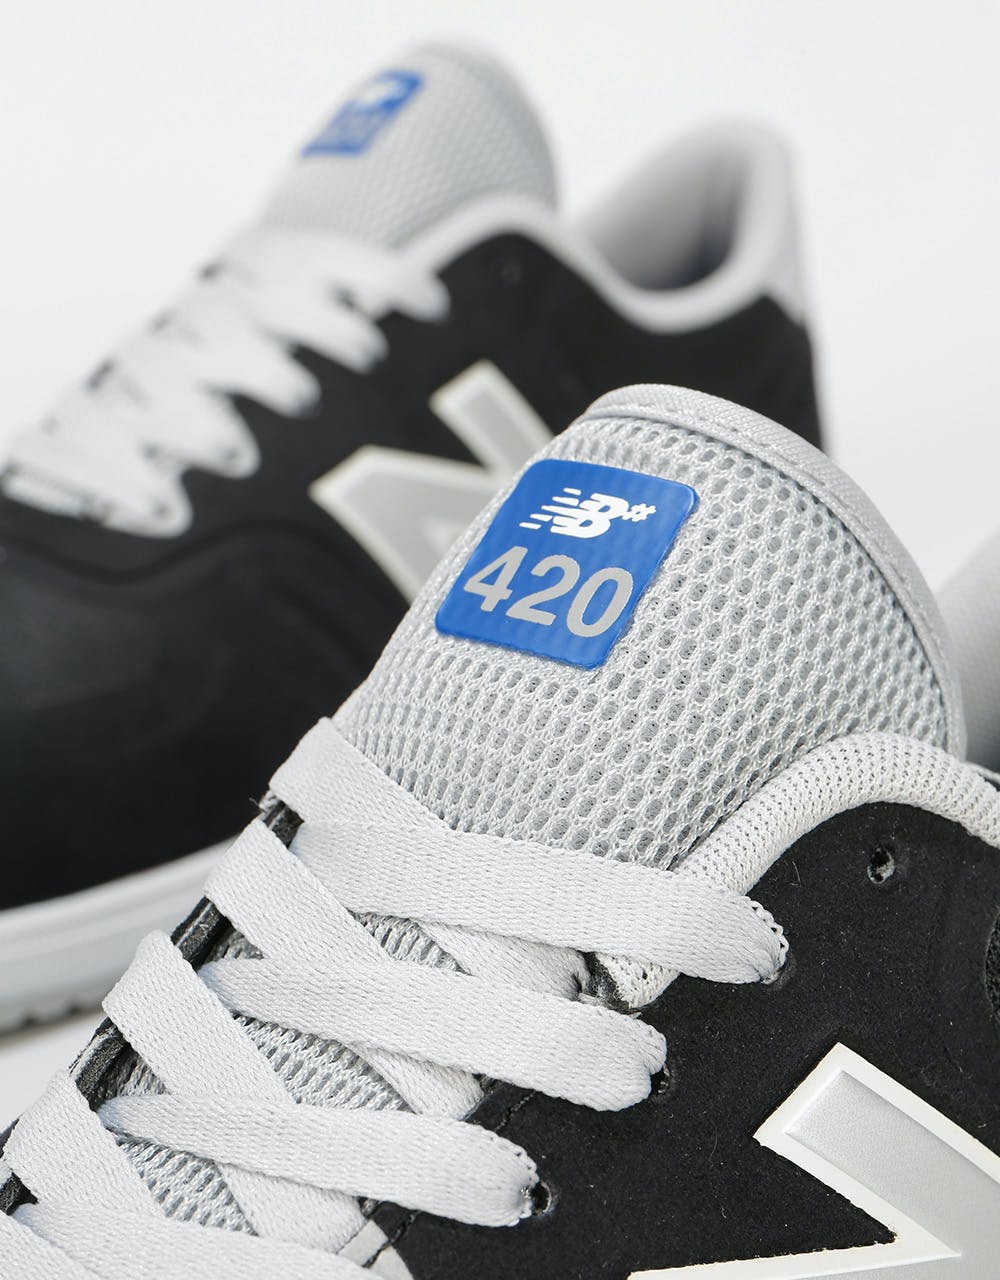 New Balance Numeric Henry 420 Skate Shoes - Black/Royal